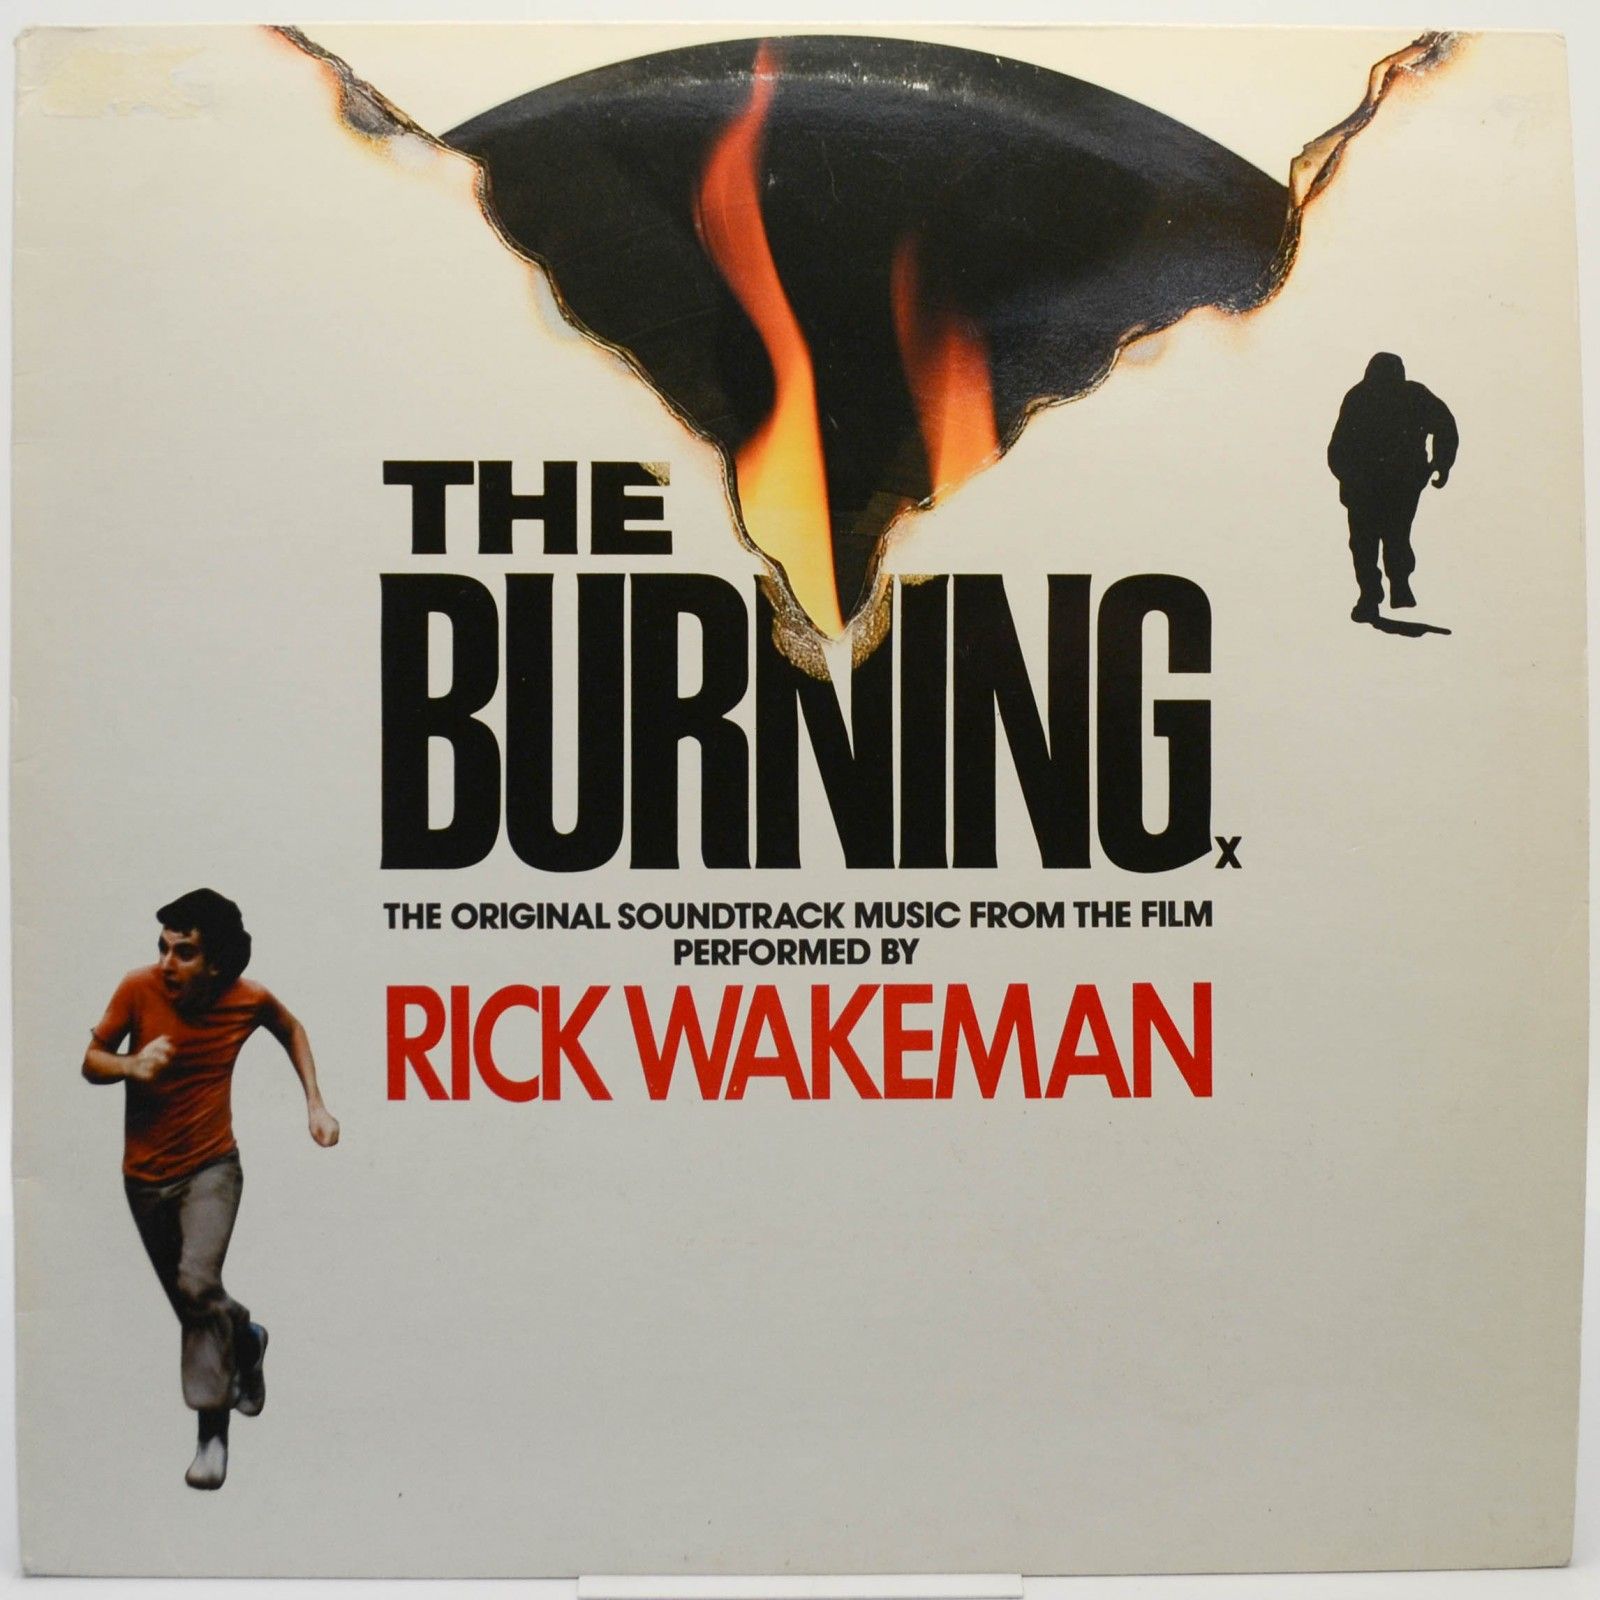 Rick Wakeman — The Burning (The Original Soundtrack Music From The Film) (UK), 1981